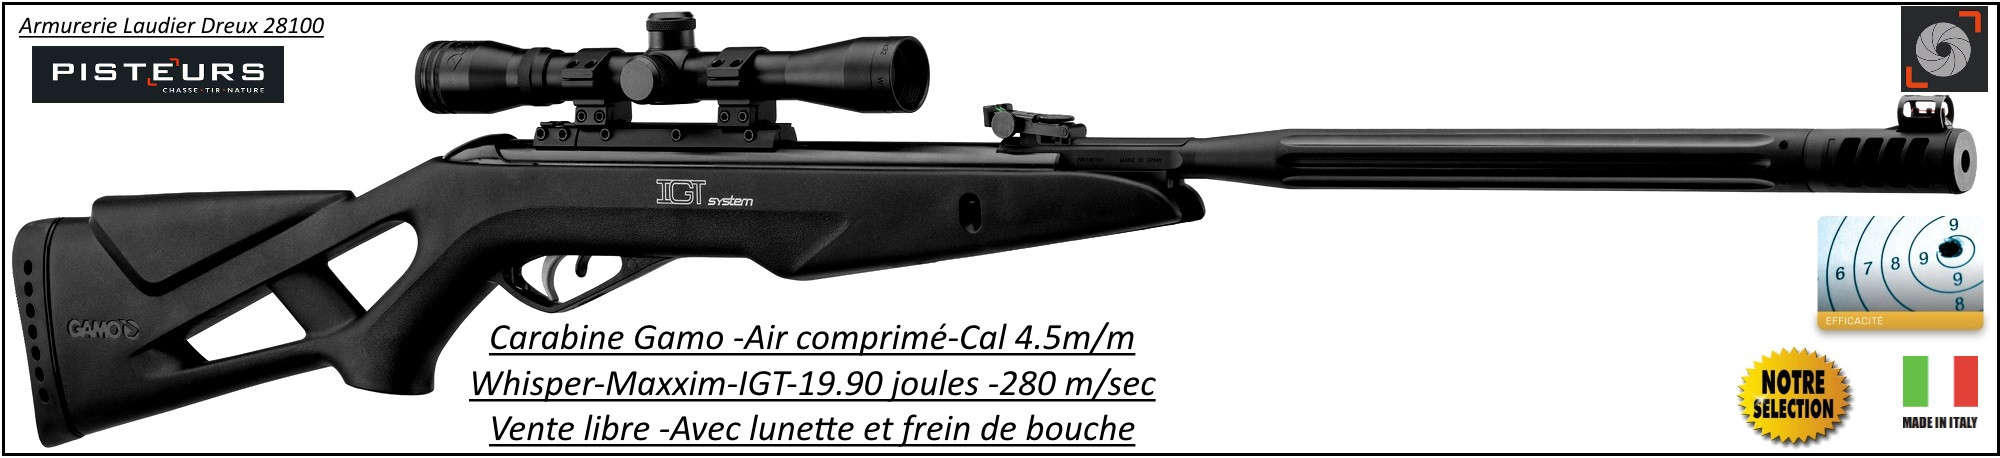 Carabine-Gamo-whisper -Maxxim-air comprimé-Cal 4.5mm -19.90 joules+ Lunette Gamo 4x32 WR + frein bouche- Promotion-Ref 30692